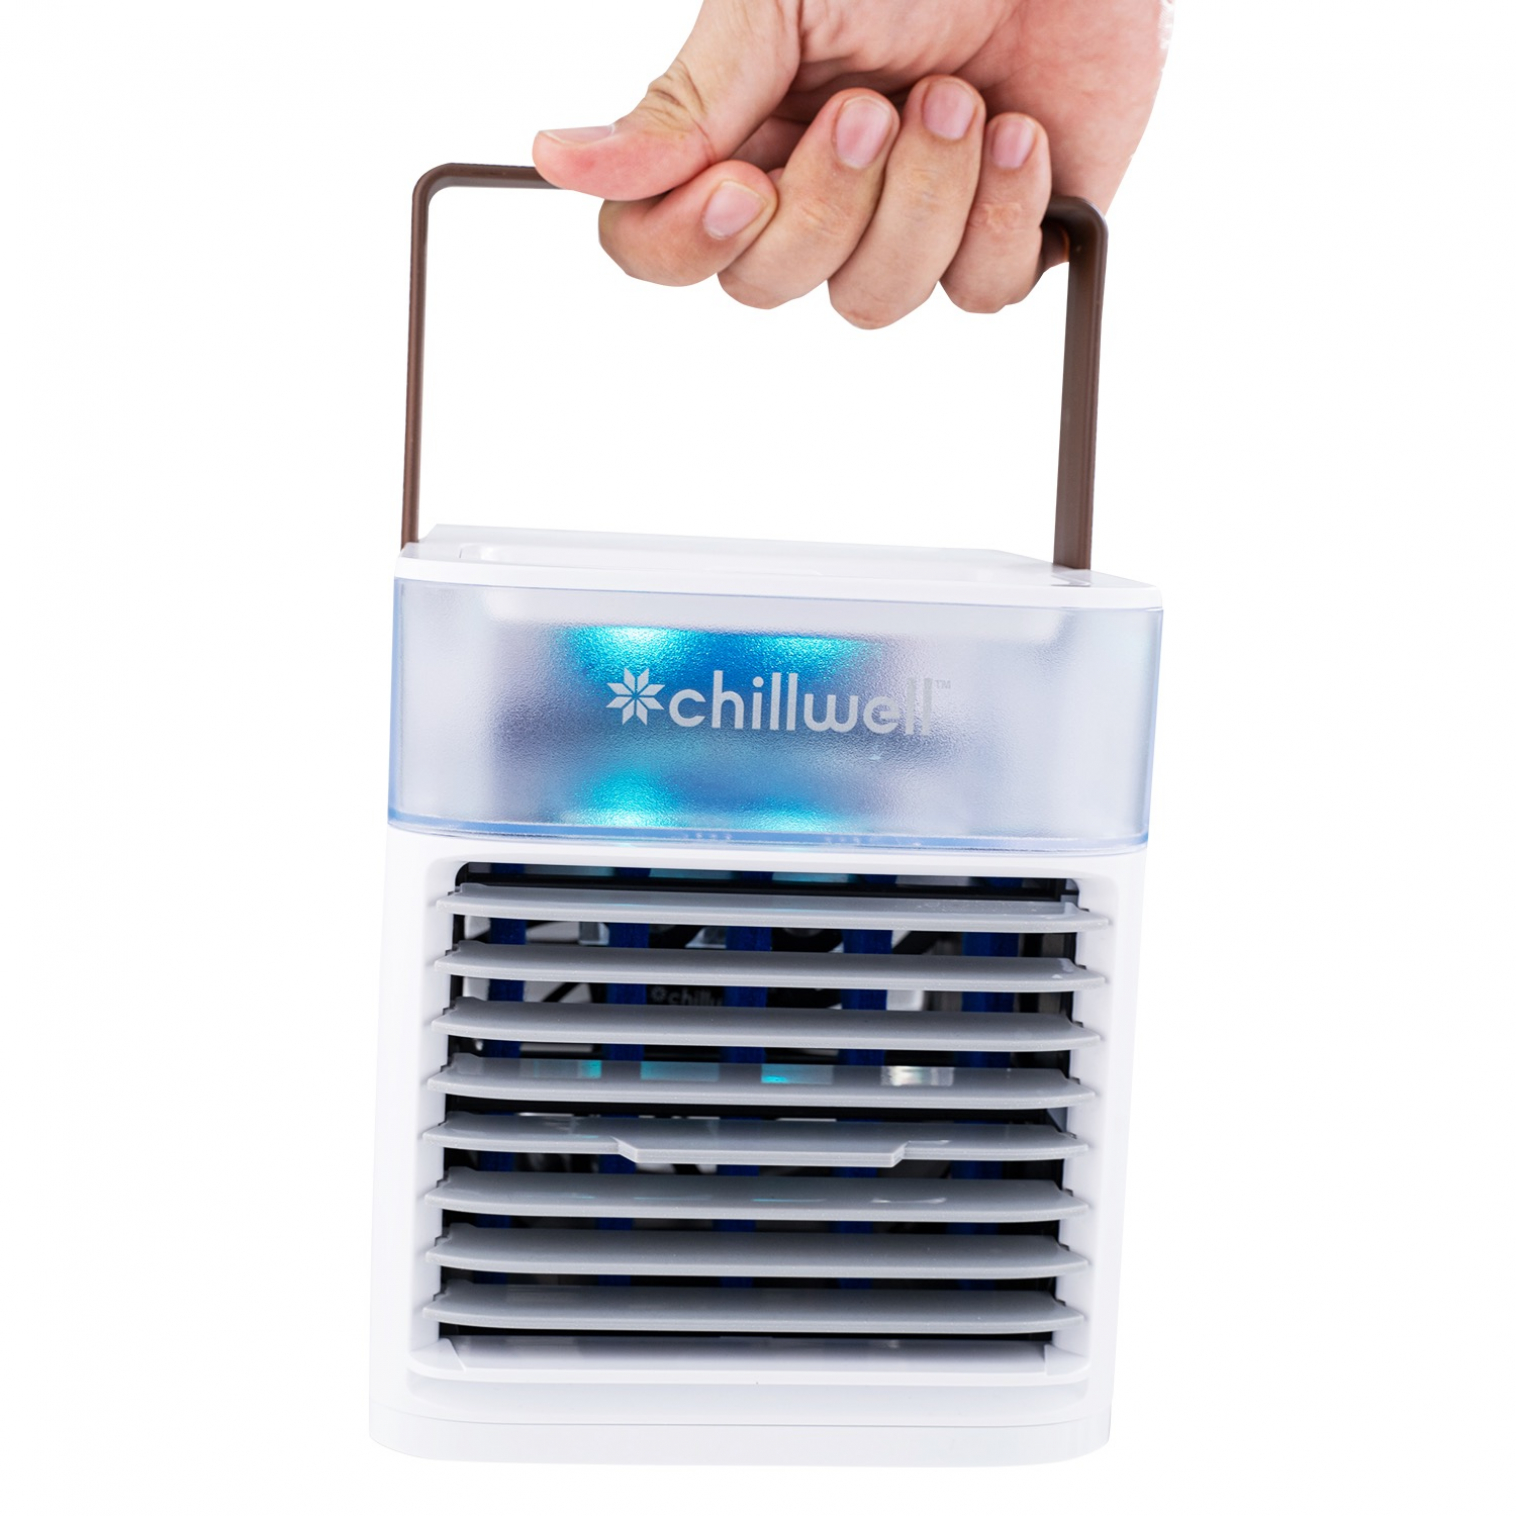 Amazon Chillwell Ac Cooler